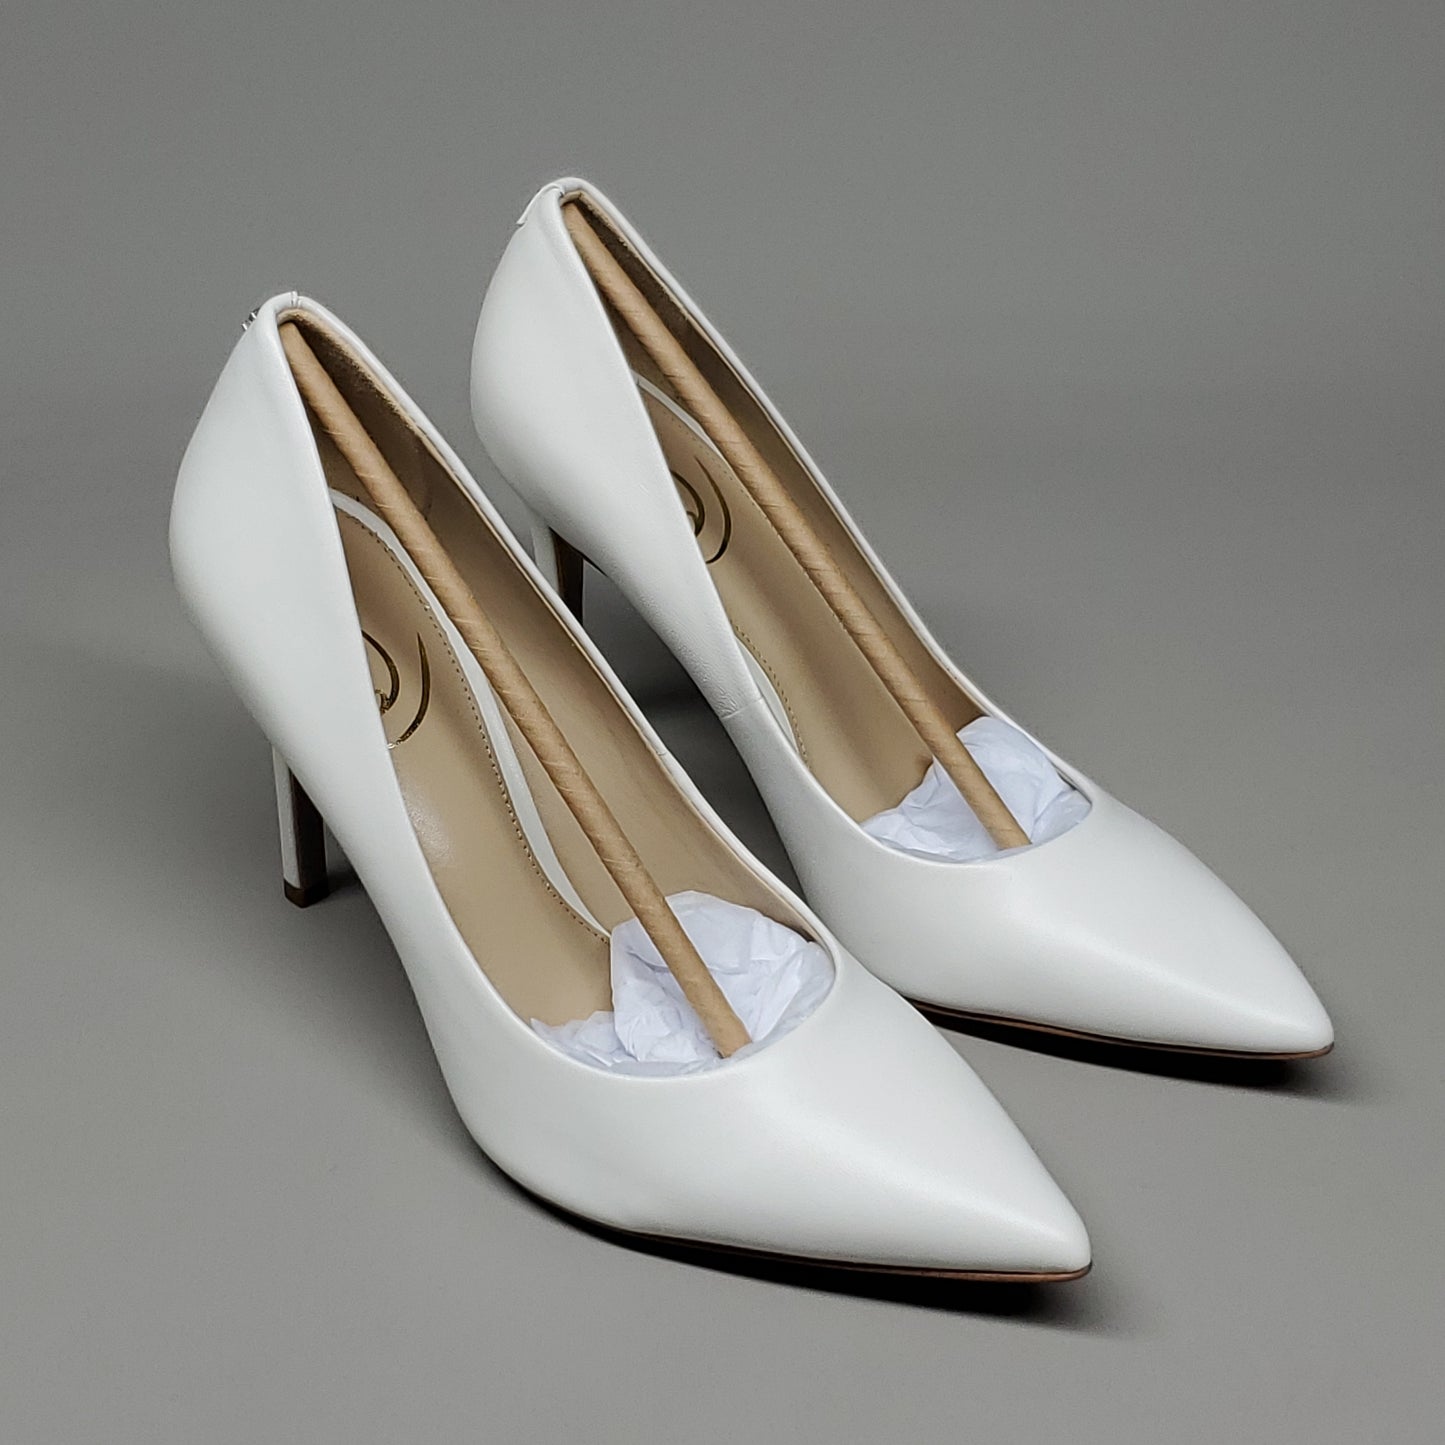 SAM EDELMAN Hazel High Heel Leather Shoes Women's Sz 7 Bright White E5638LC102 (New)